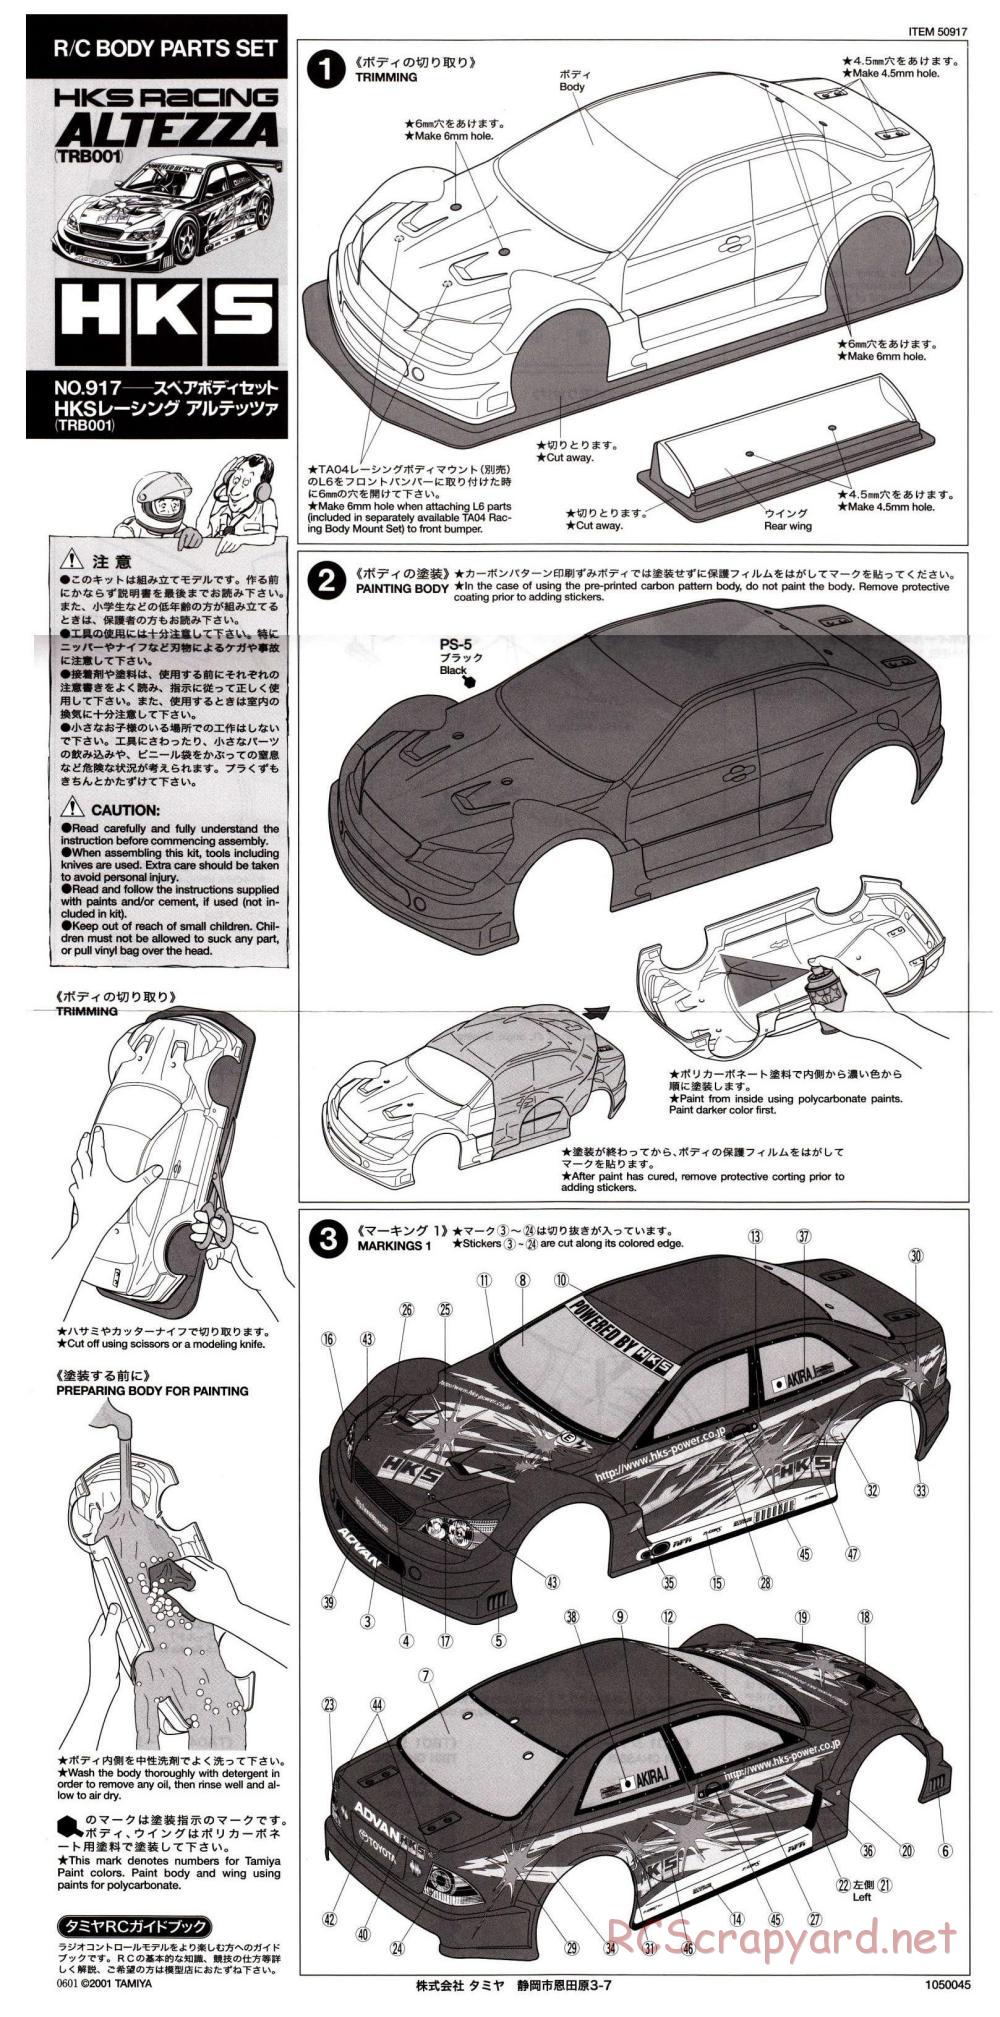 Tamiya - HKS Racing Altezza - TA-04R Chassis - Body Manual - Page 1